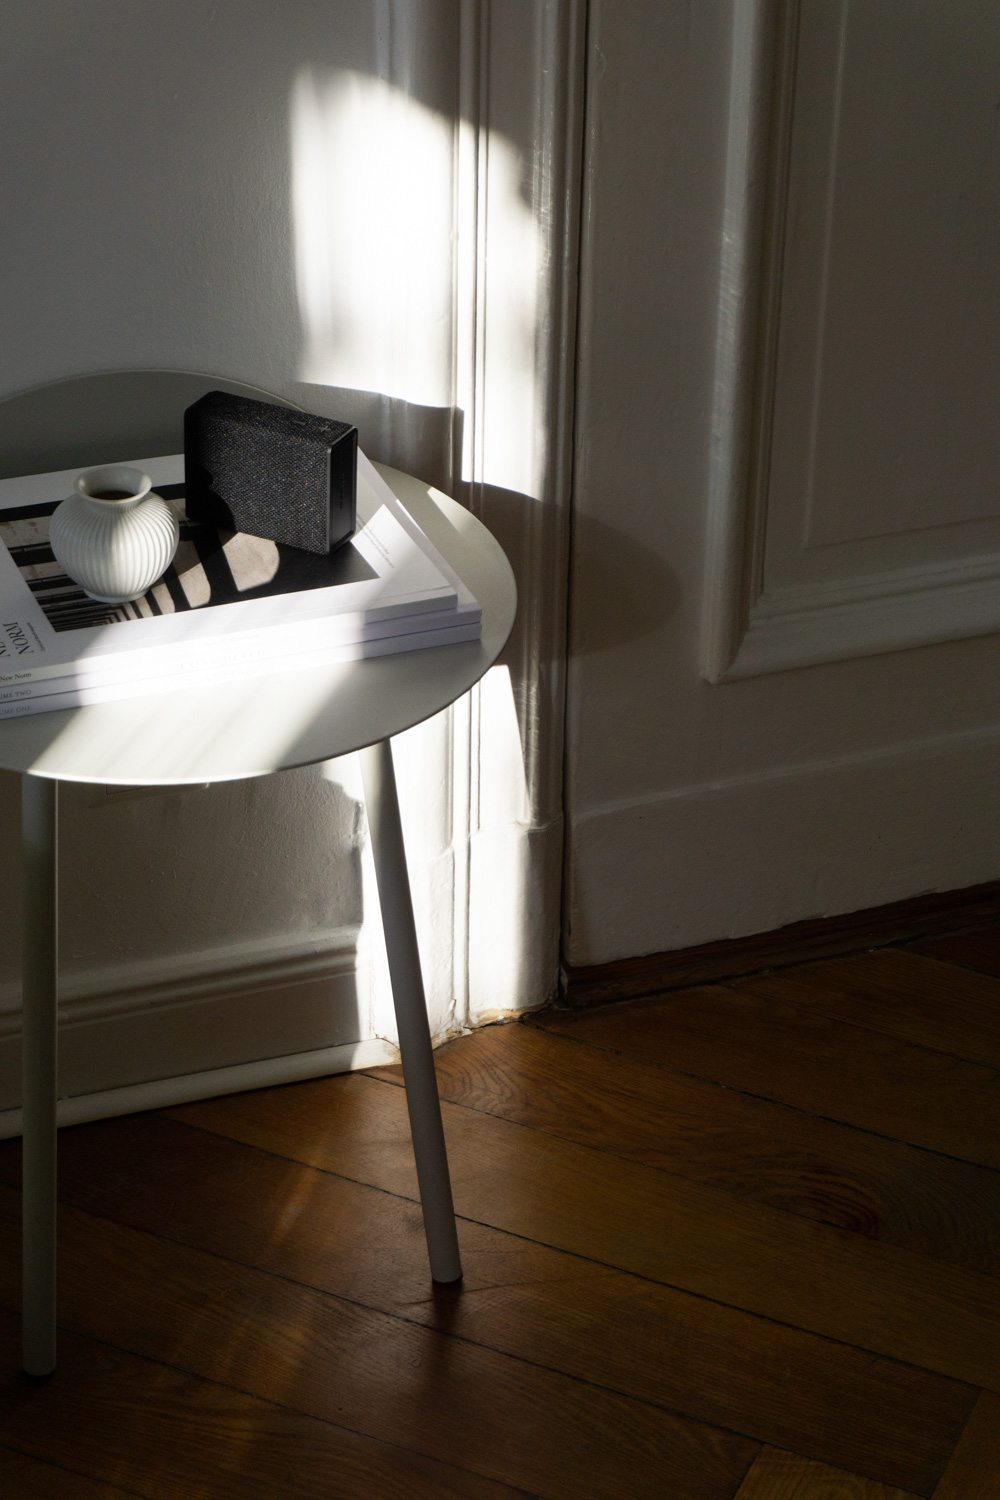 URBANISTA ~ wireless speakers, headphones &earbuds | minimalist design, scandinavian home, shadow play | RG Daily Blog